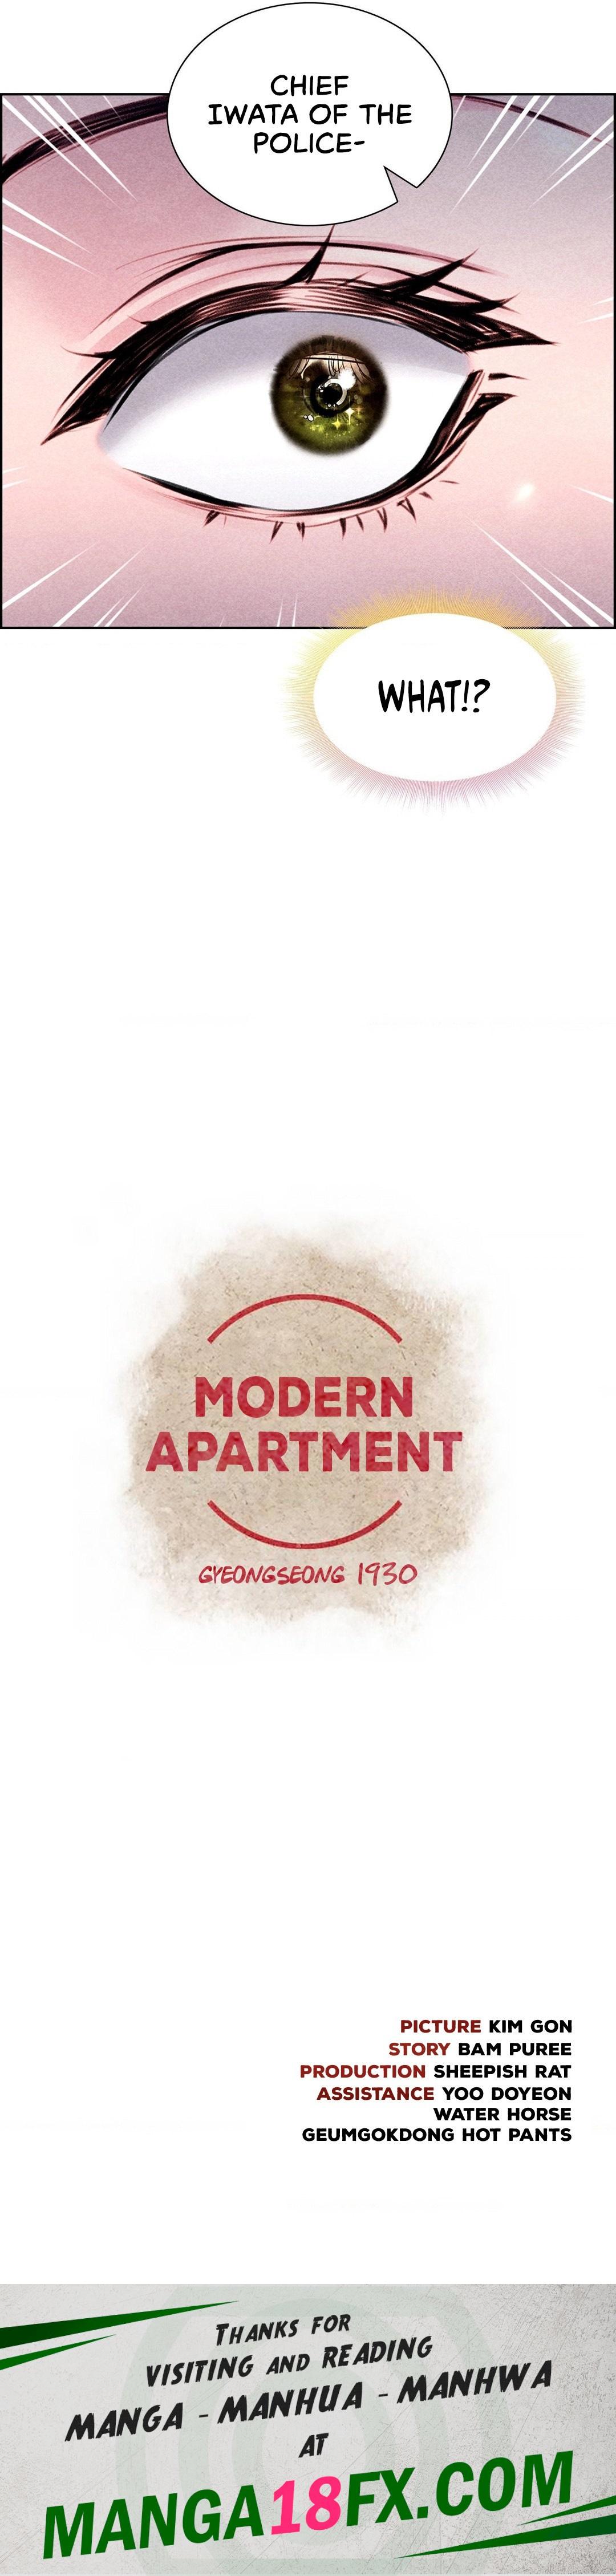 Modern Apartment, Gyeonseong 1930 - Chapter 3 Page 30